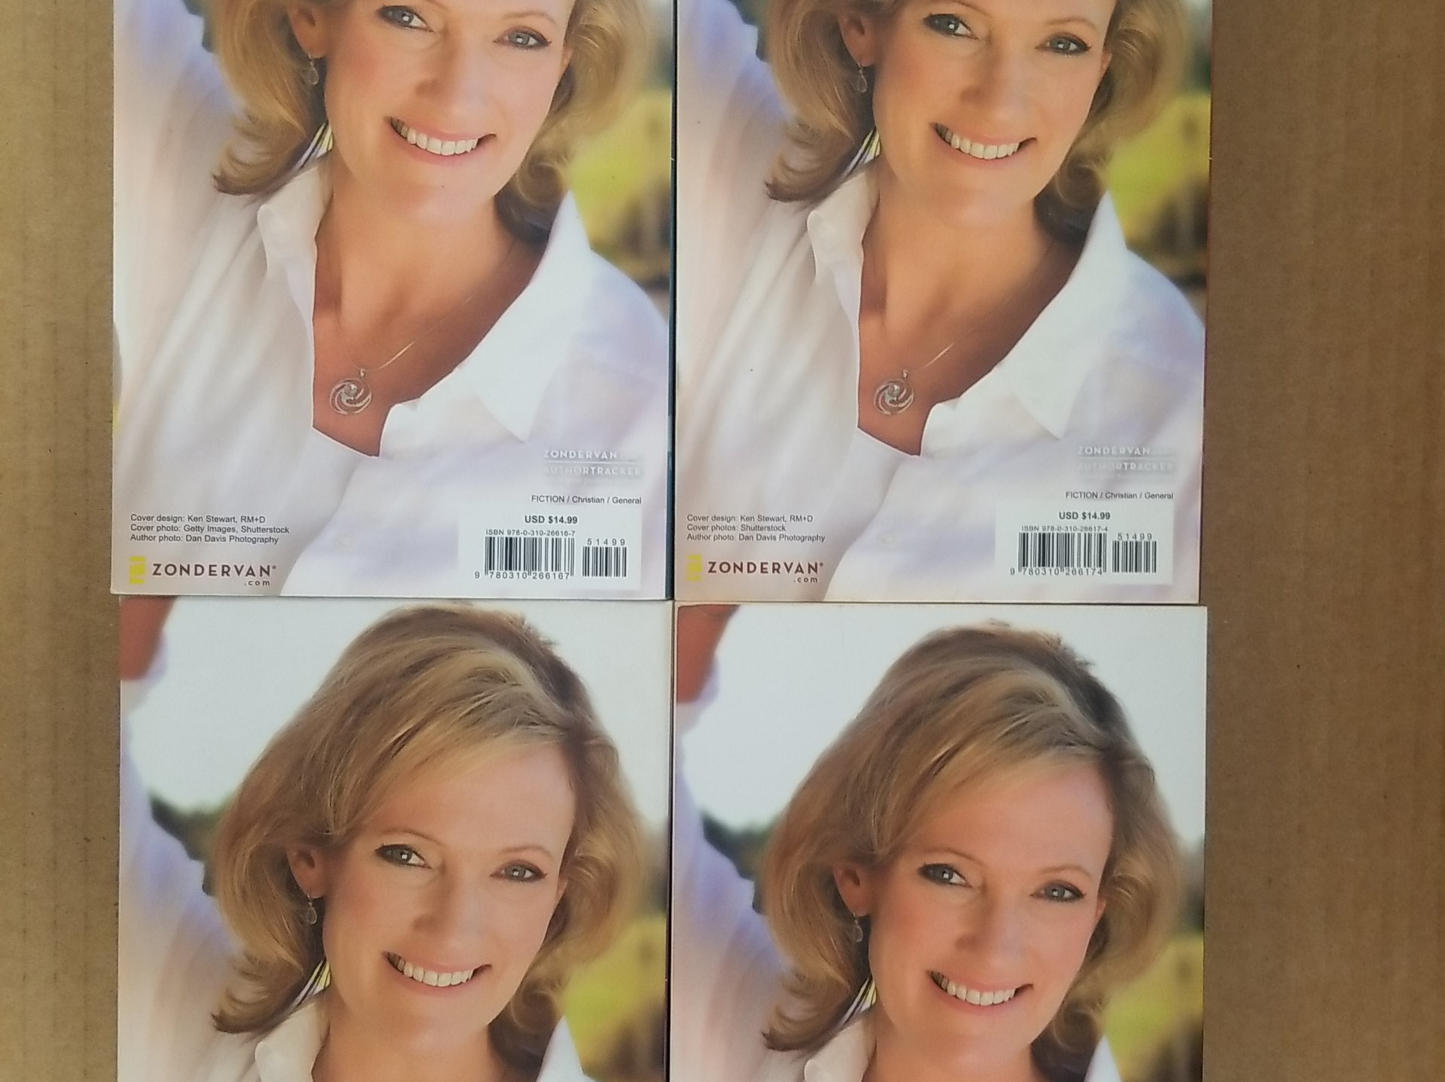 Karen Kingsbury Above the Line series Books 1-4 Complete Set.